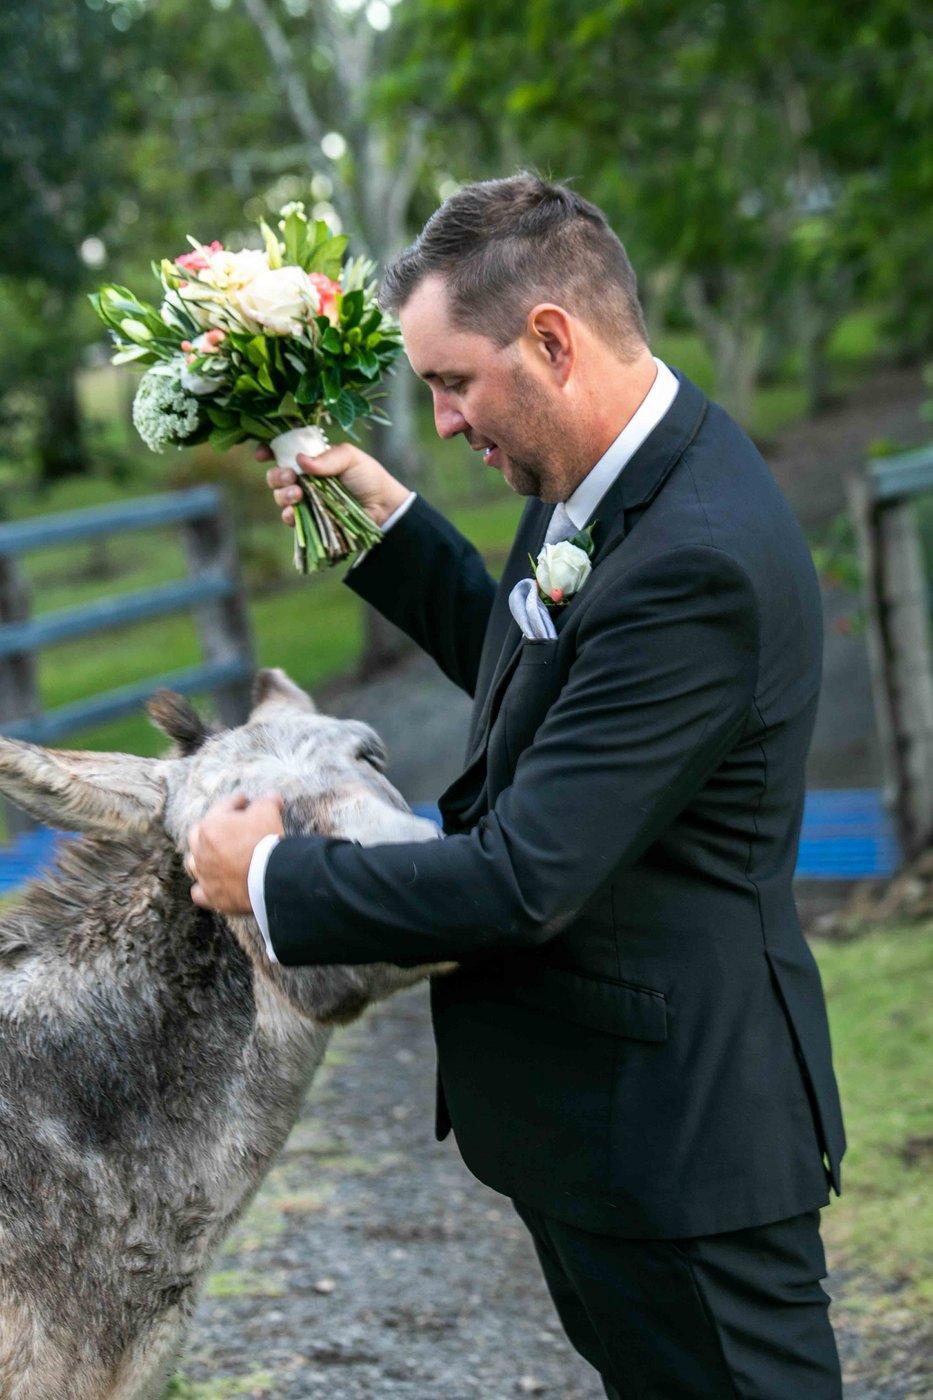 Wedding Photography best man with flowers & donkey